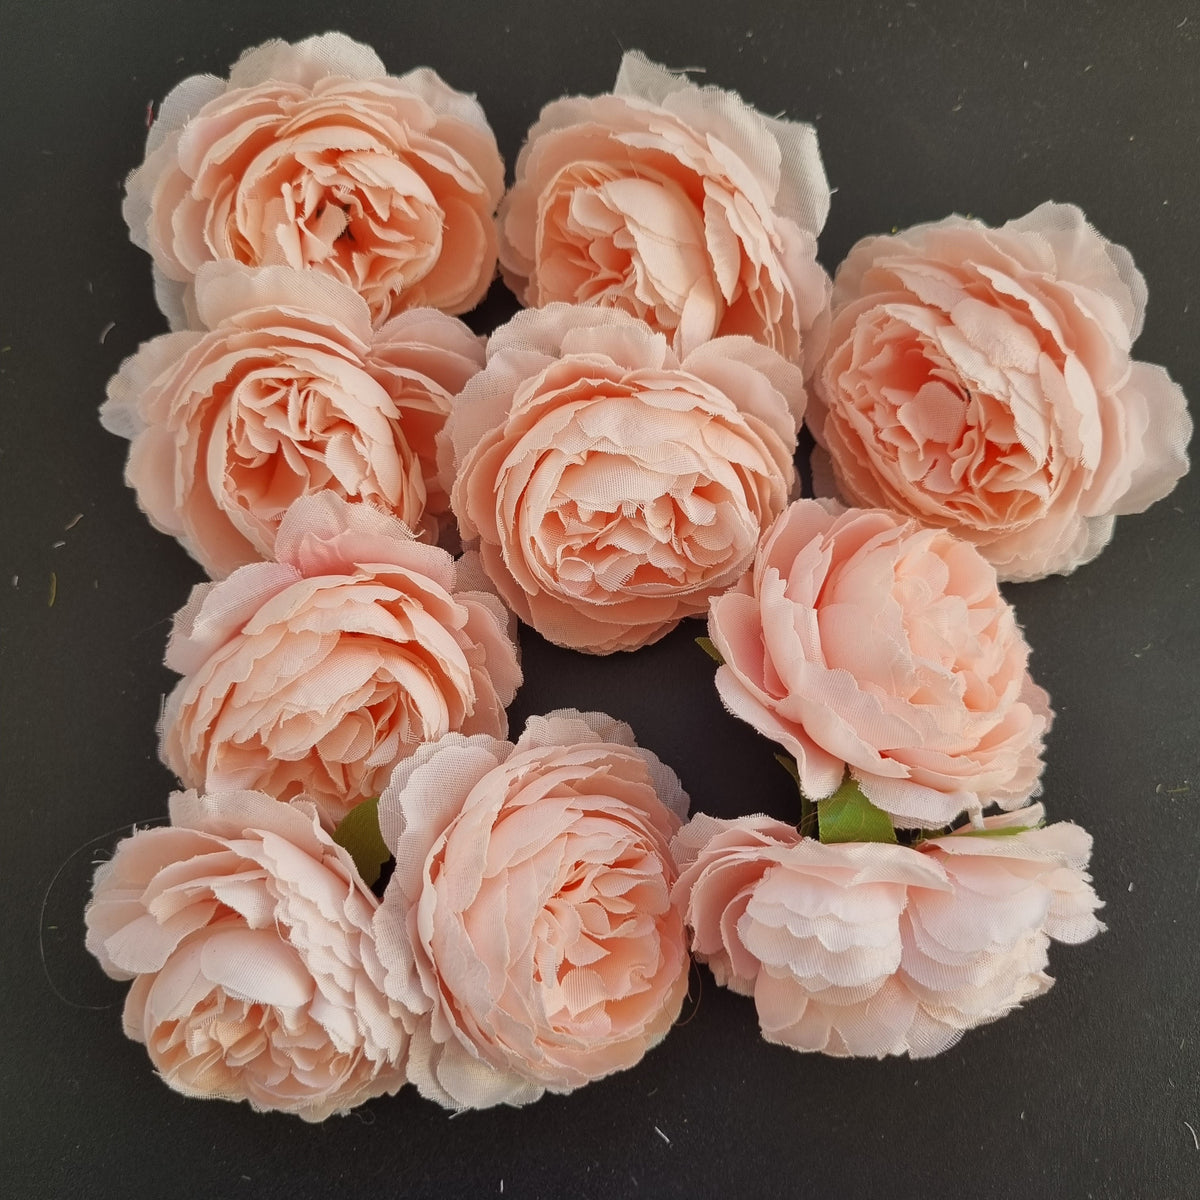 10 små lyserøde pæoner - Hårpynt med blomster og perler til bryllup, konfirmation og fest